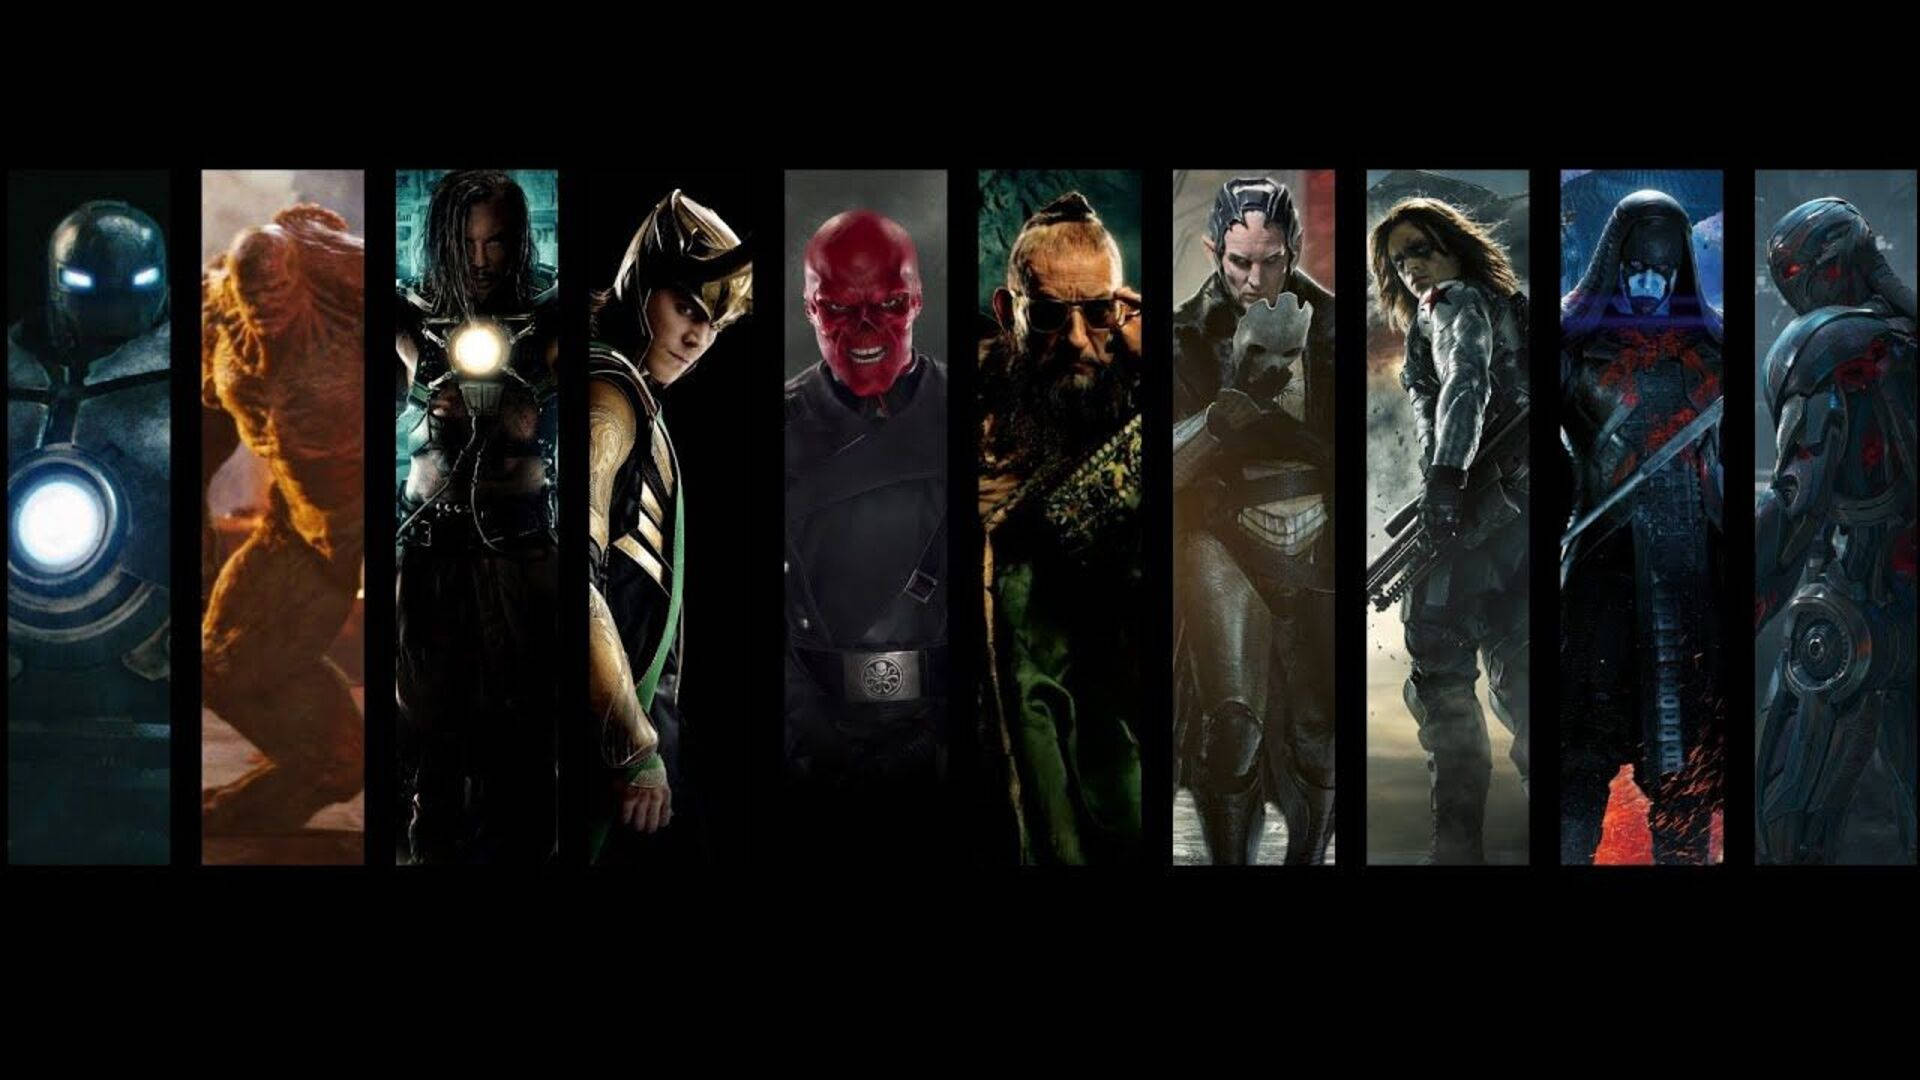 Marvel Villains Collage